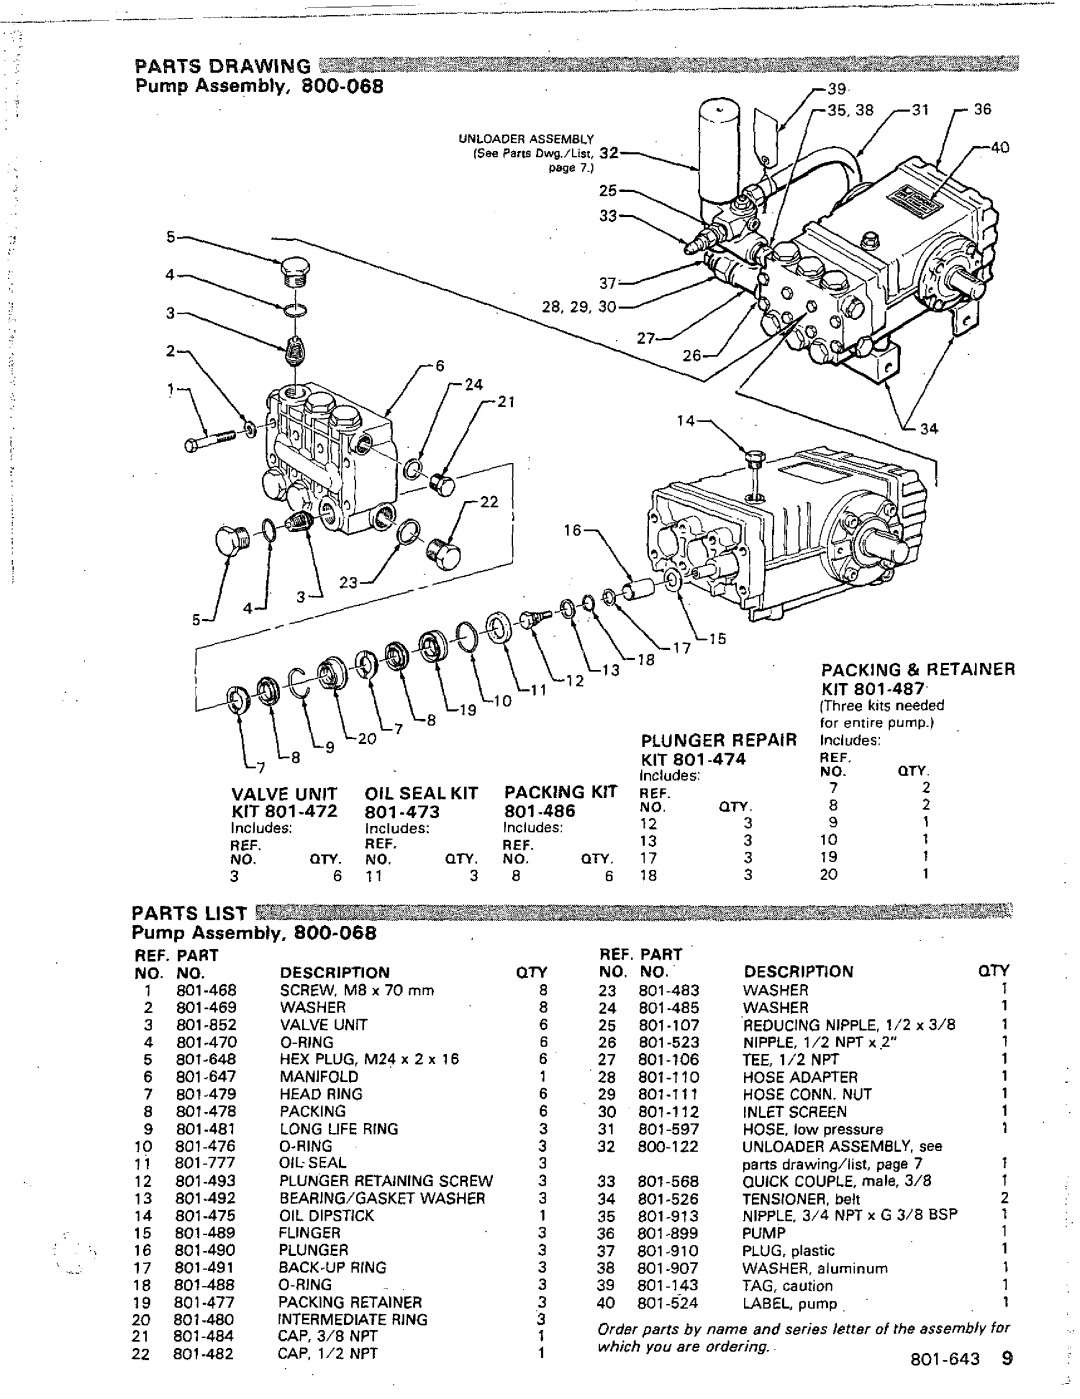 Graco Inc 801-643 manual Part§ Drawing, Parts List, Pump Assembly, Ref. Part 